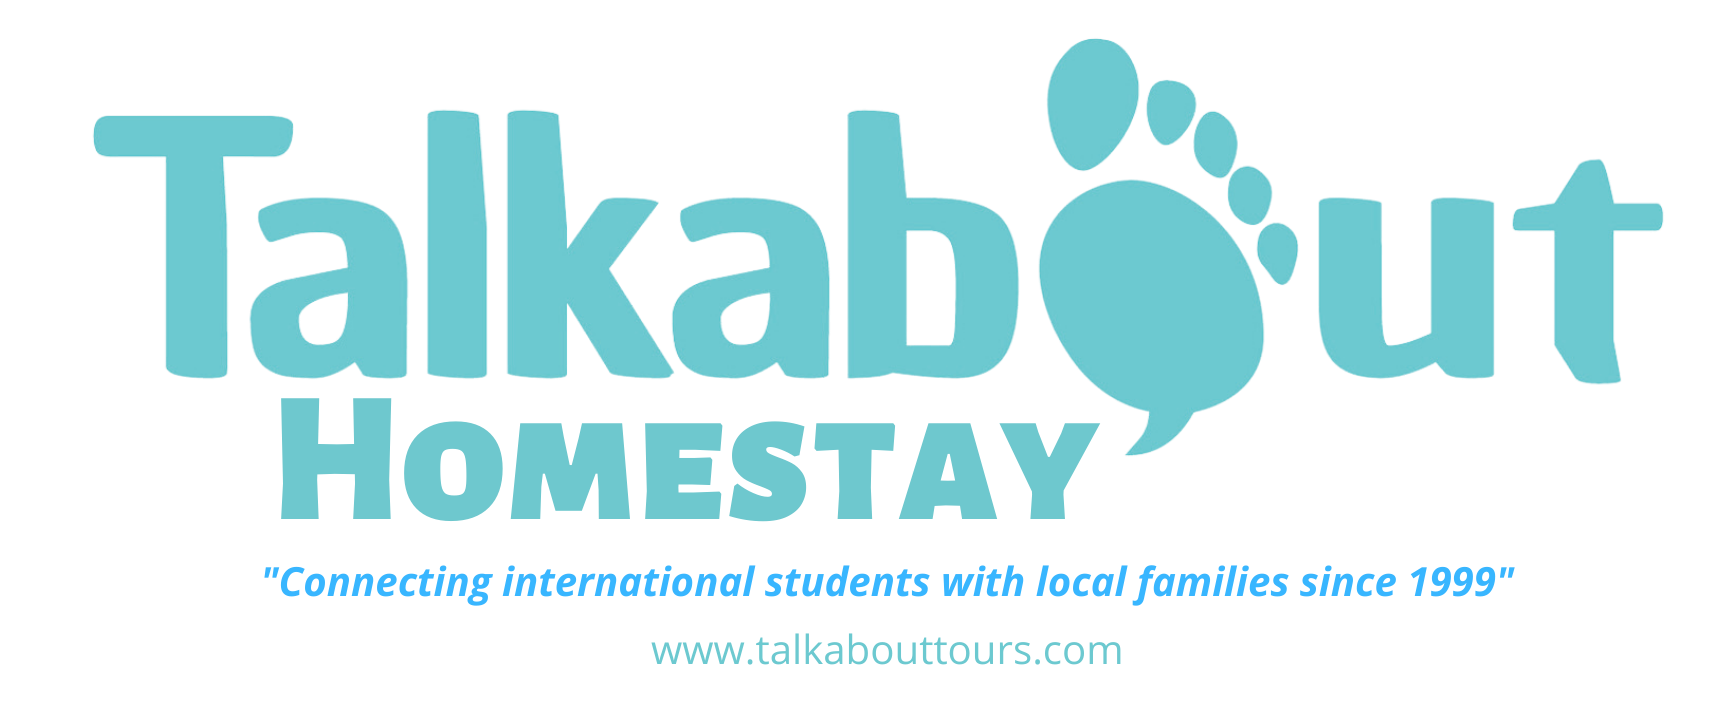 Talkabout Homestay logo